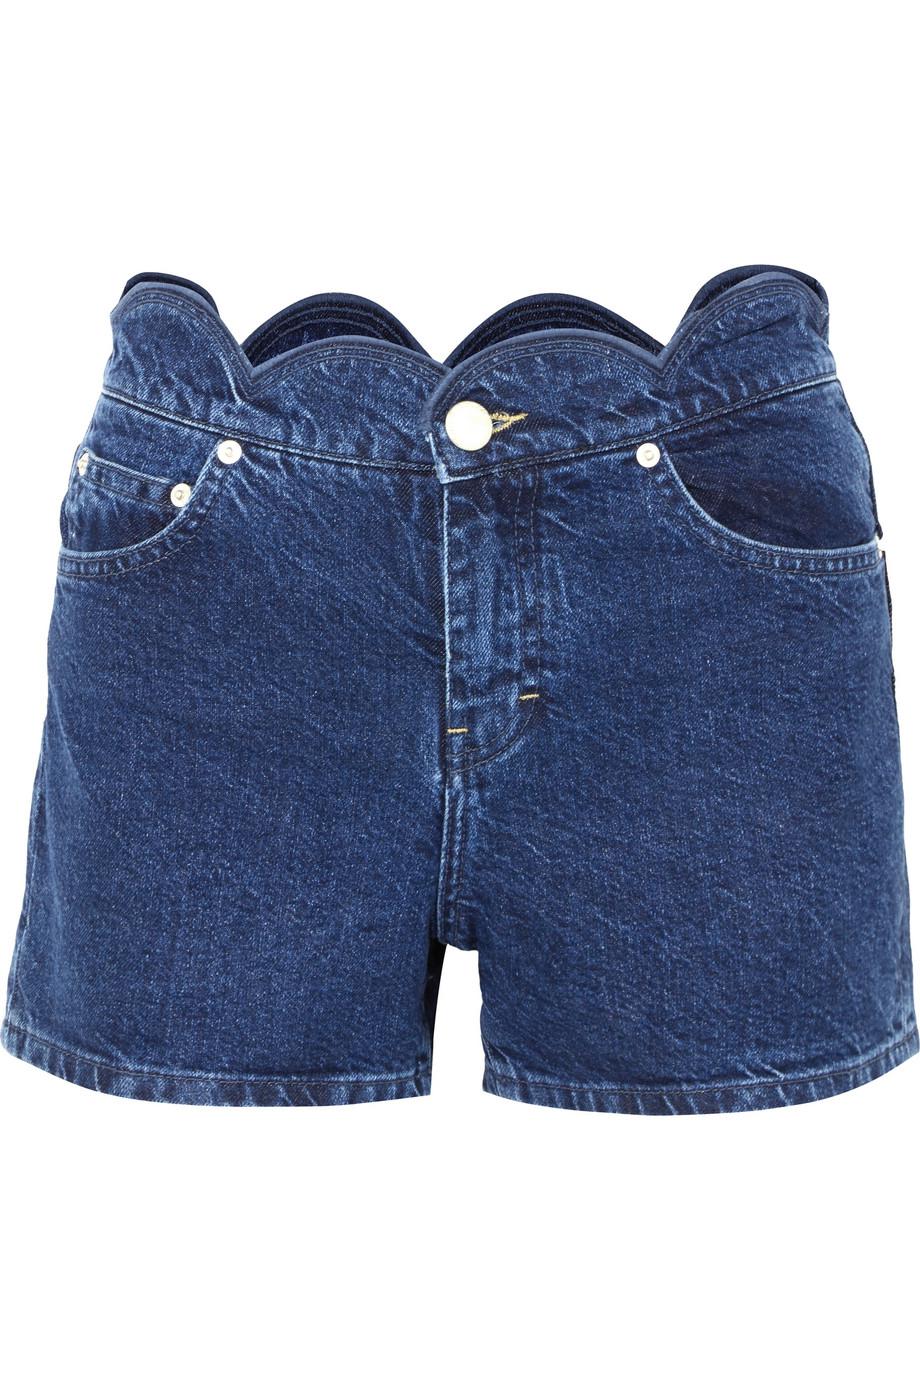 Maje Scalloped Denim Shorts in Blue | Lyst